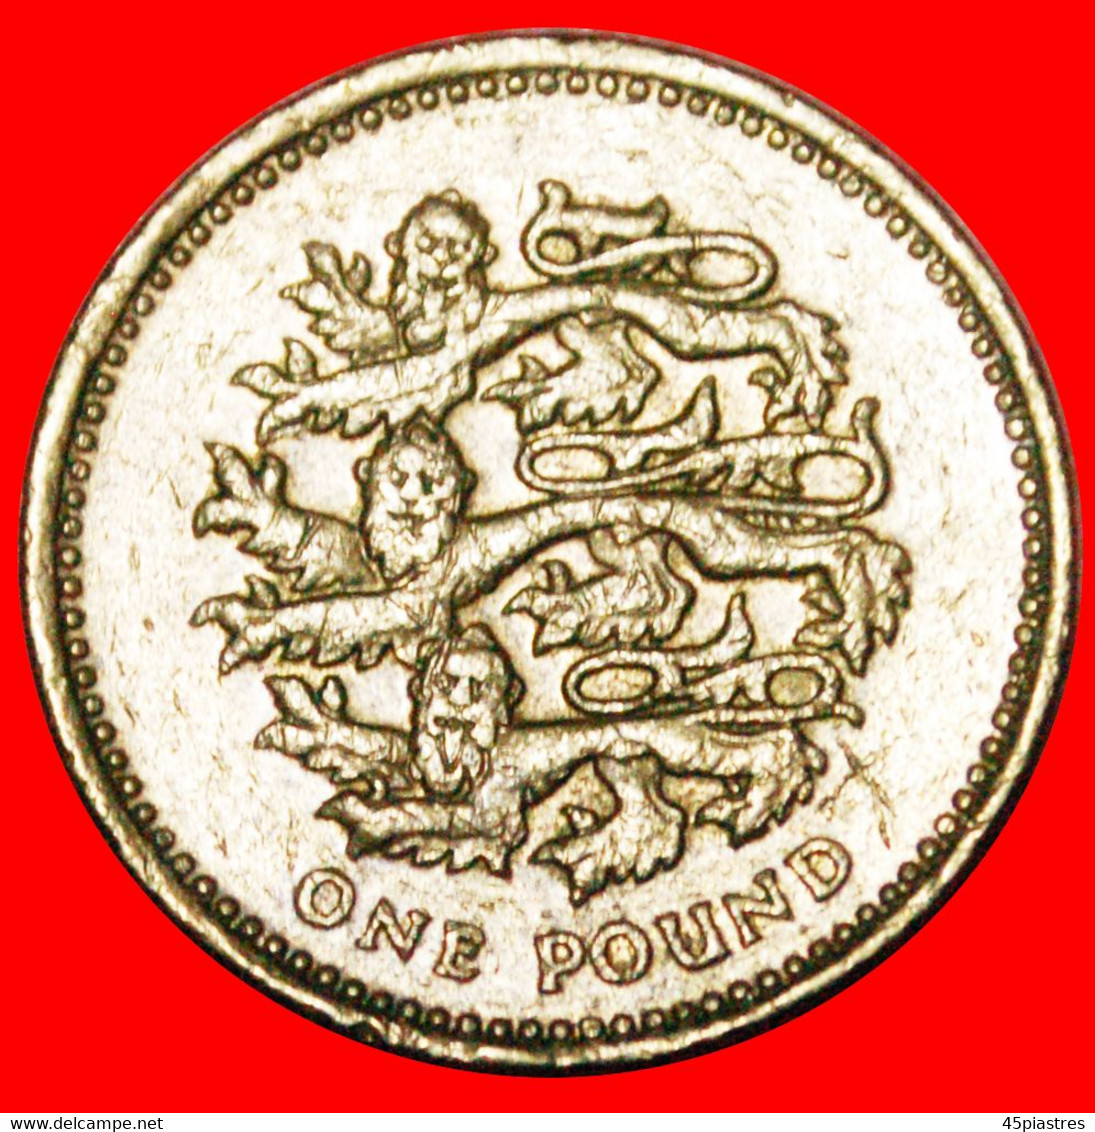 • LIONS: GREAT BRITAIN ★ 1 POUND 2002!!! LOW START ★ NO RESERVE! - 1 Pound